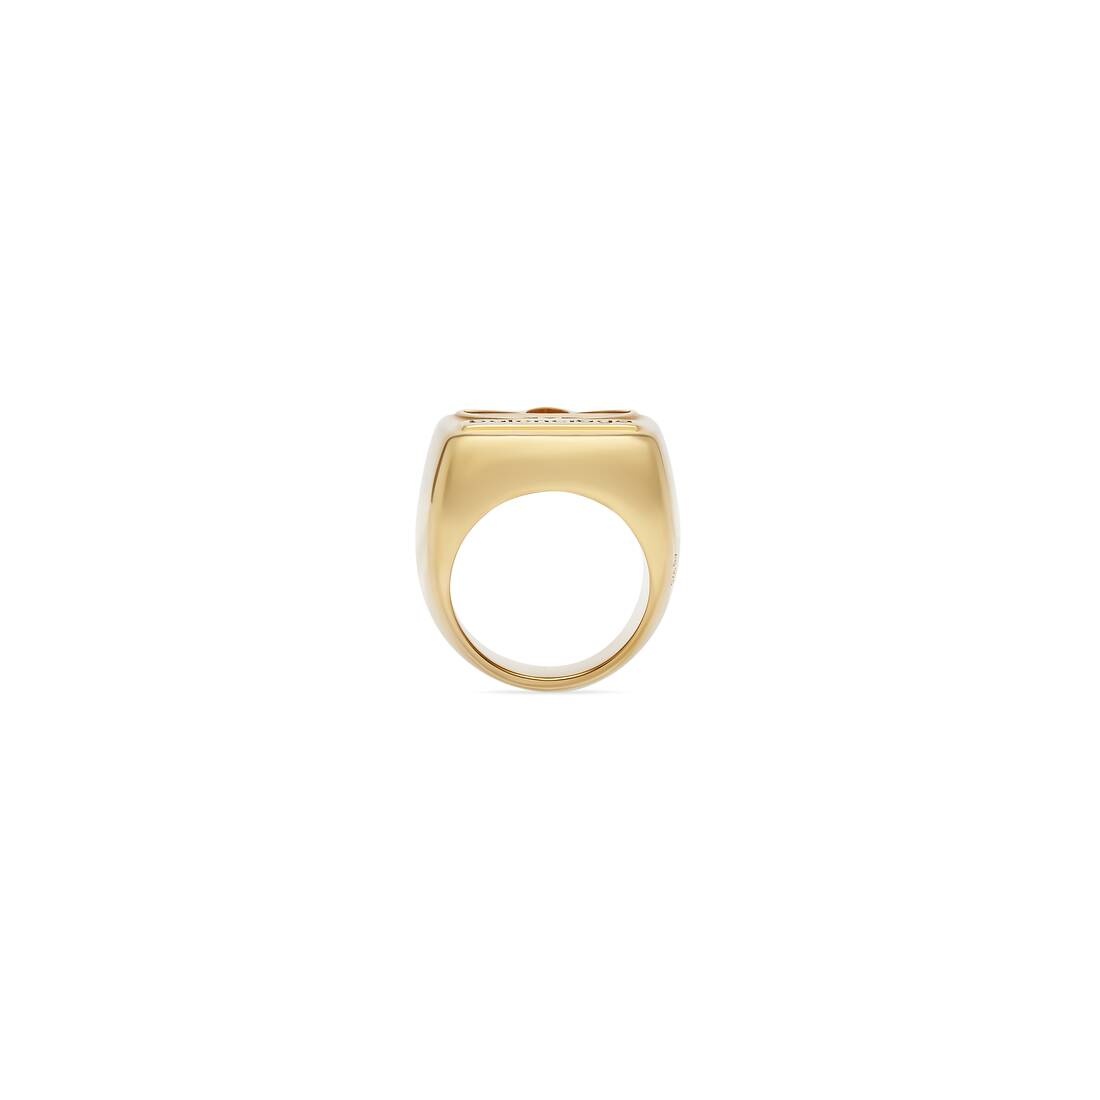 Balenciaga / Adidas Trefoil Signet Ring  in Gold - 3